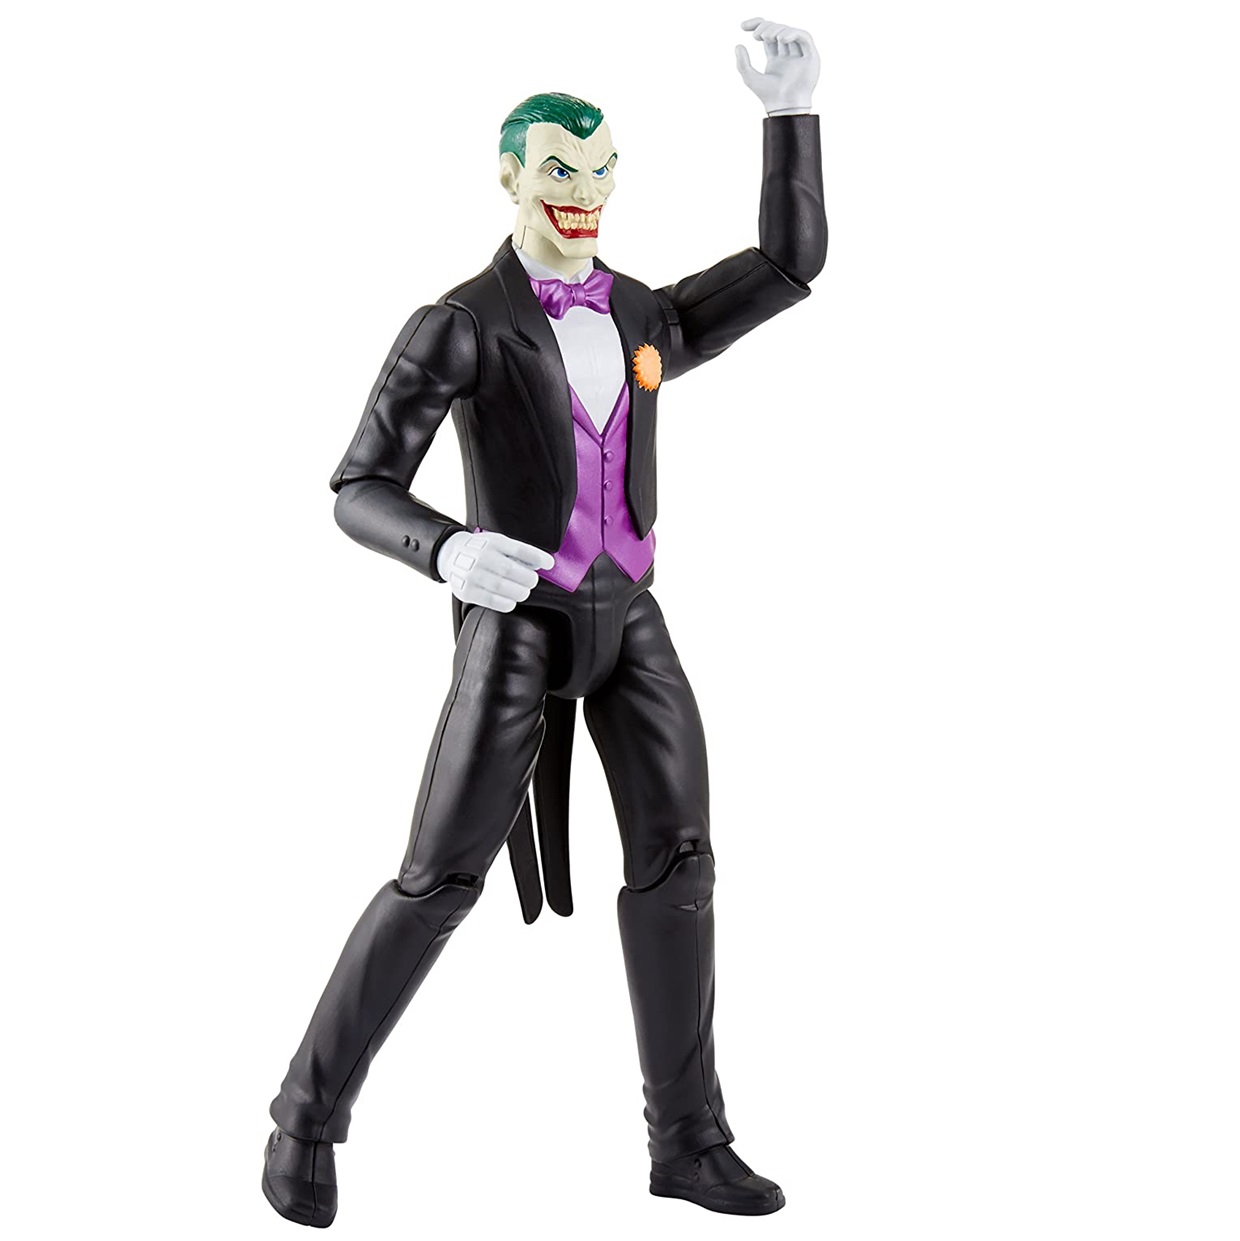 The Joker Coringa ( Guason ) Batman Missions True Moves 12 Pulg